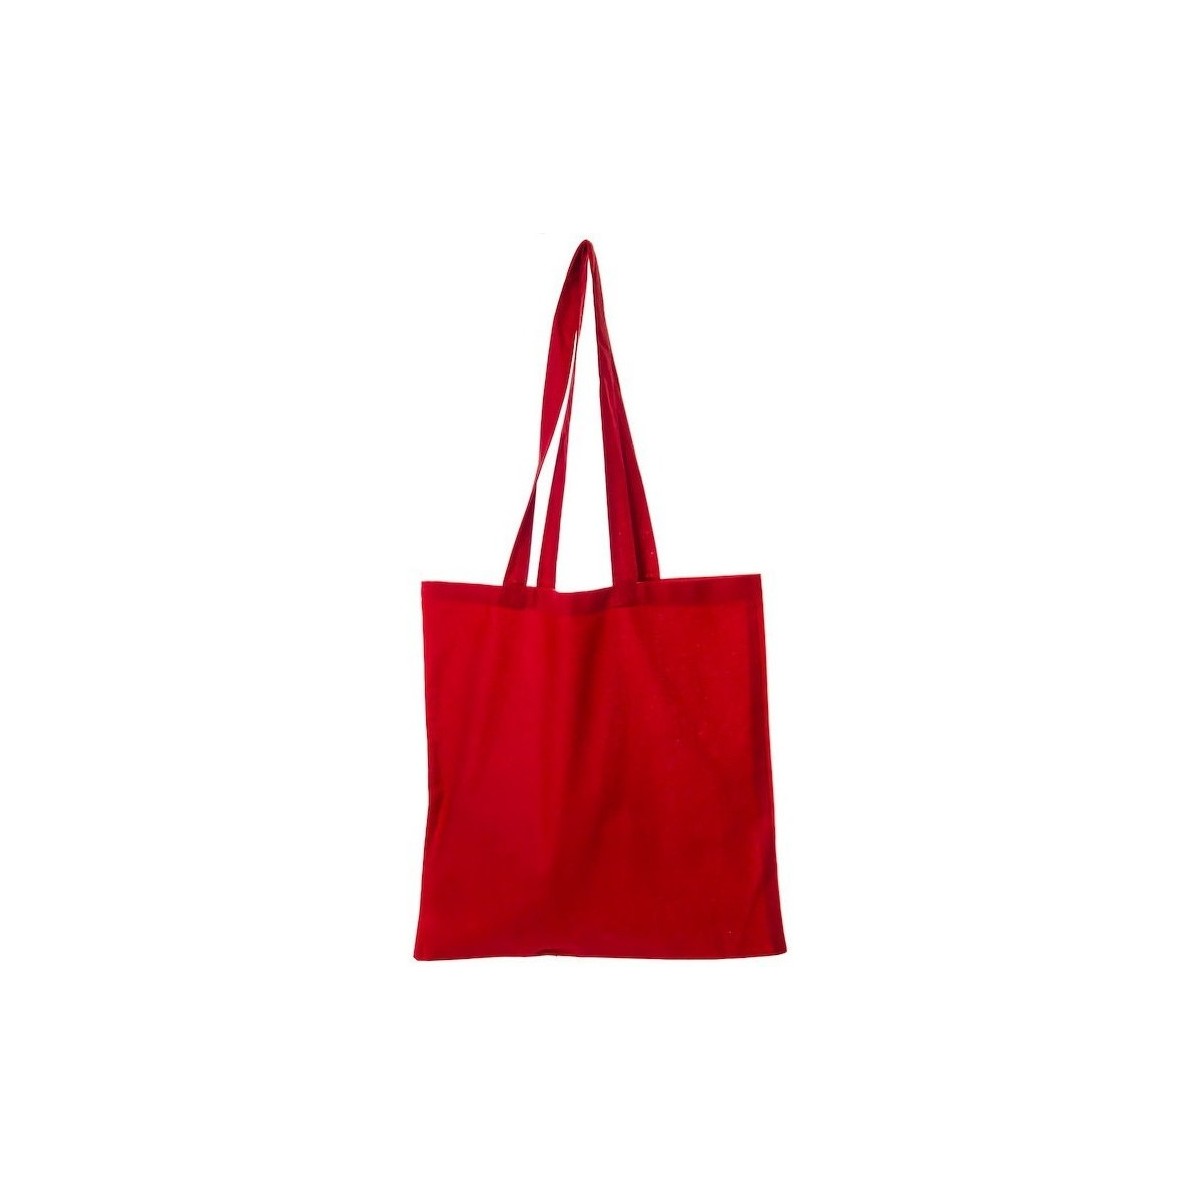 Borse Tracolle United Bag Store UB126 Rosso